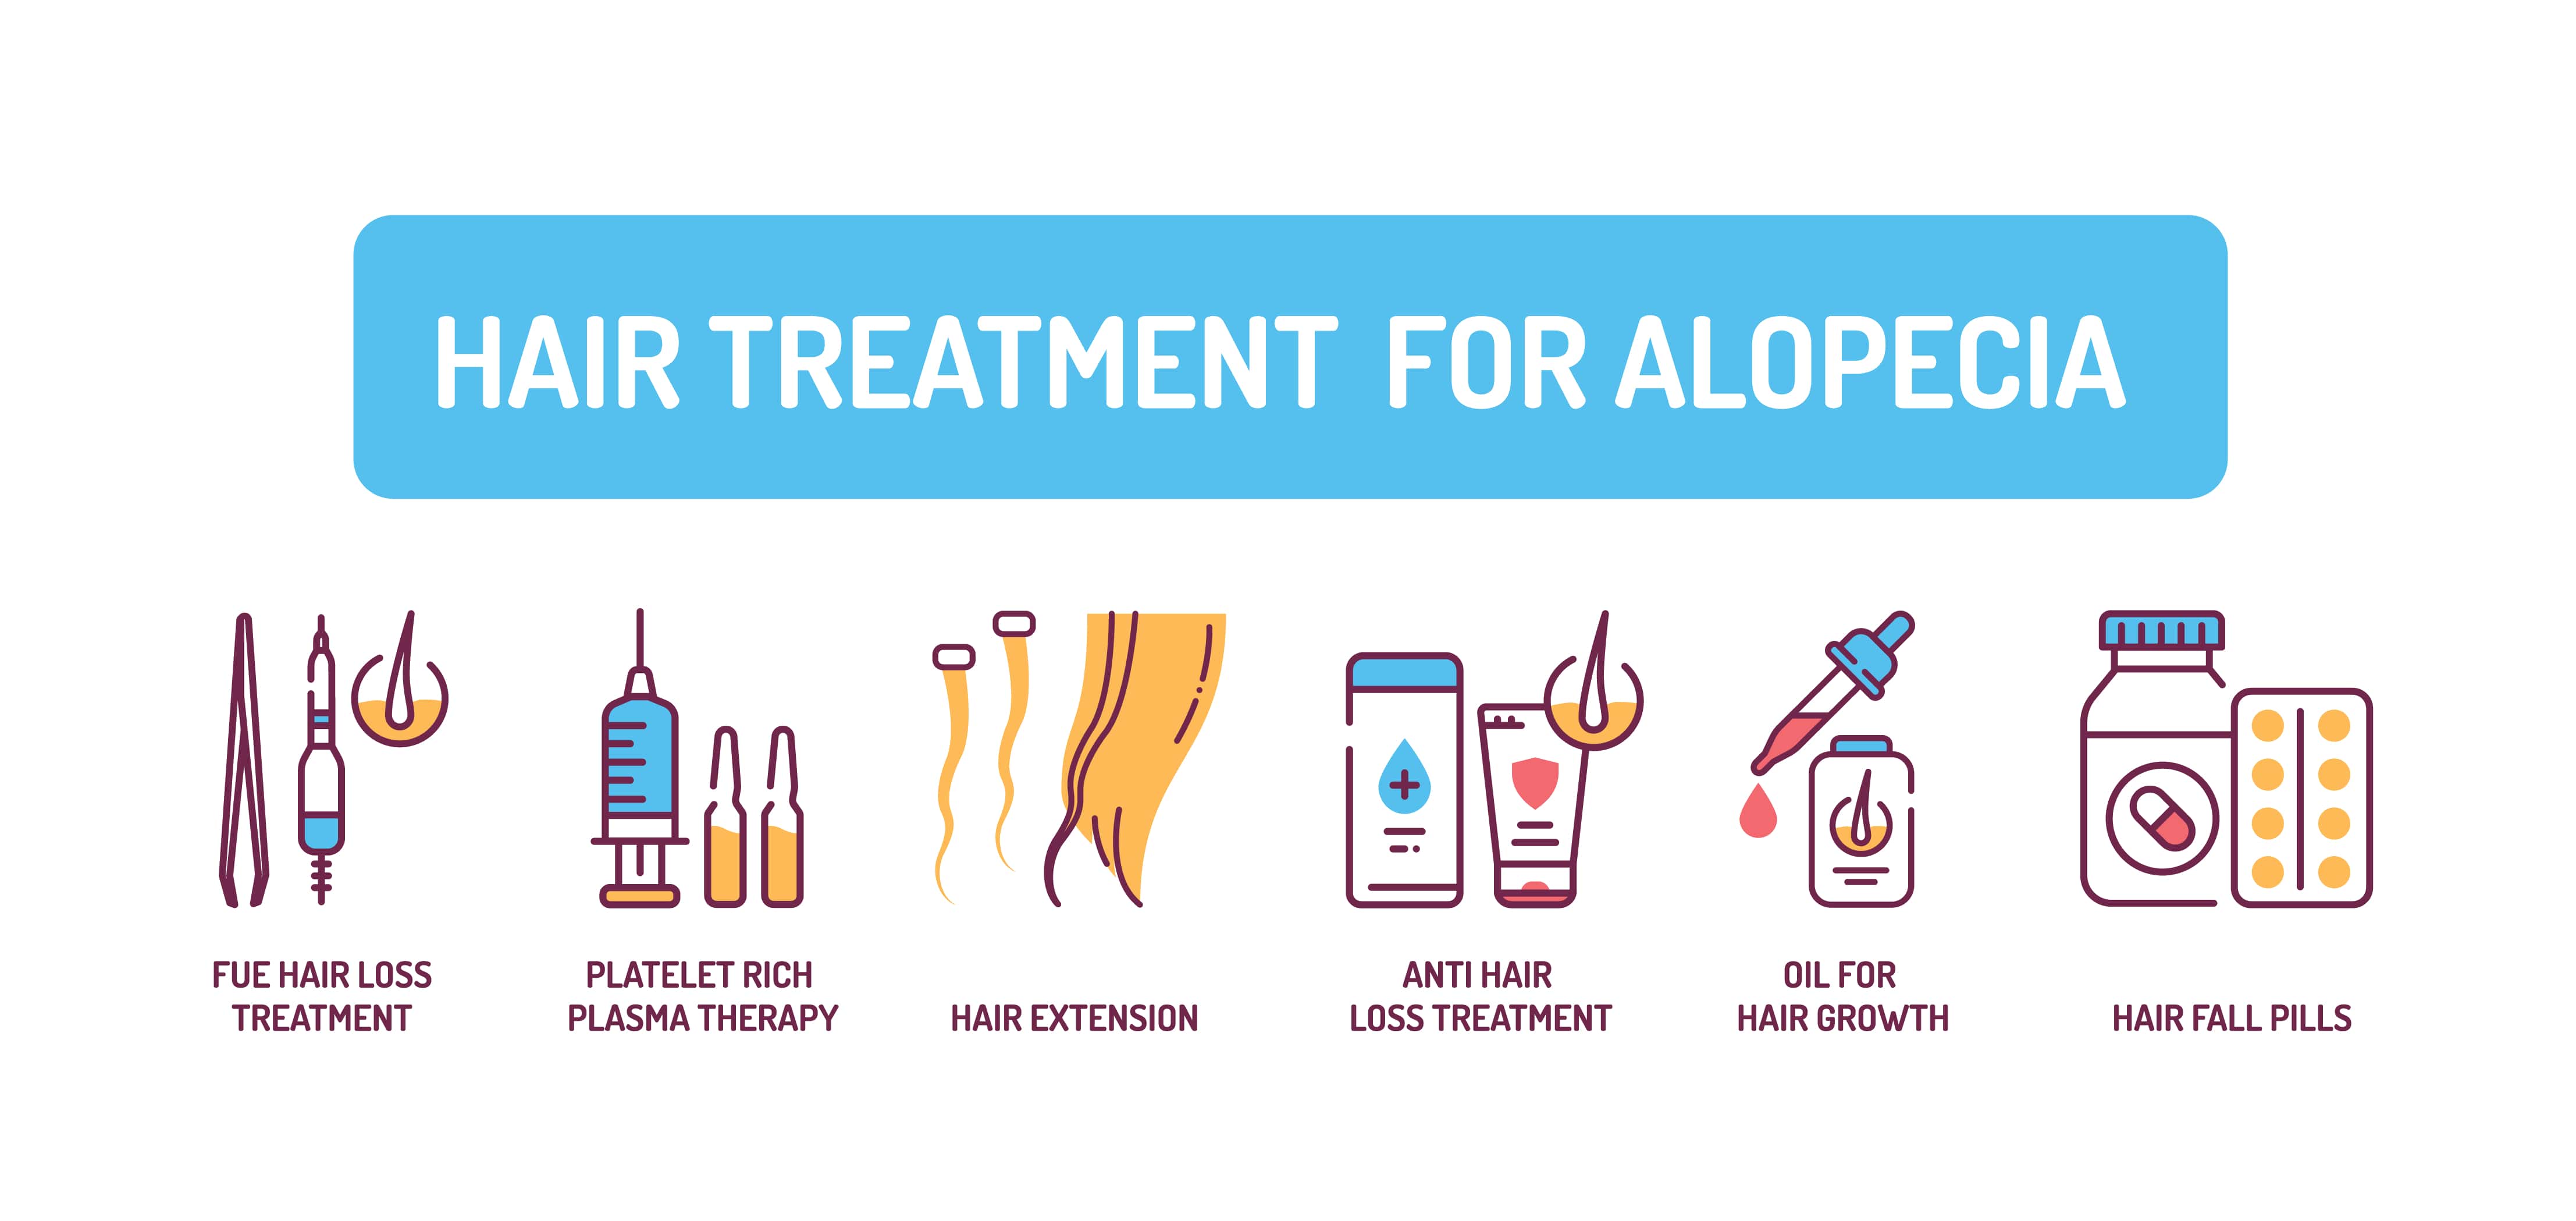 Hair Treatment For Alopecia